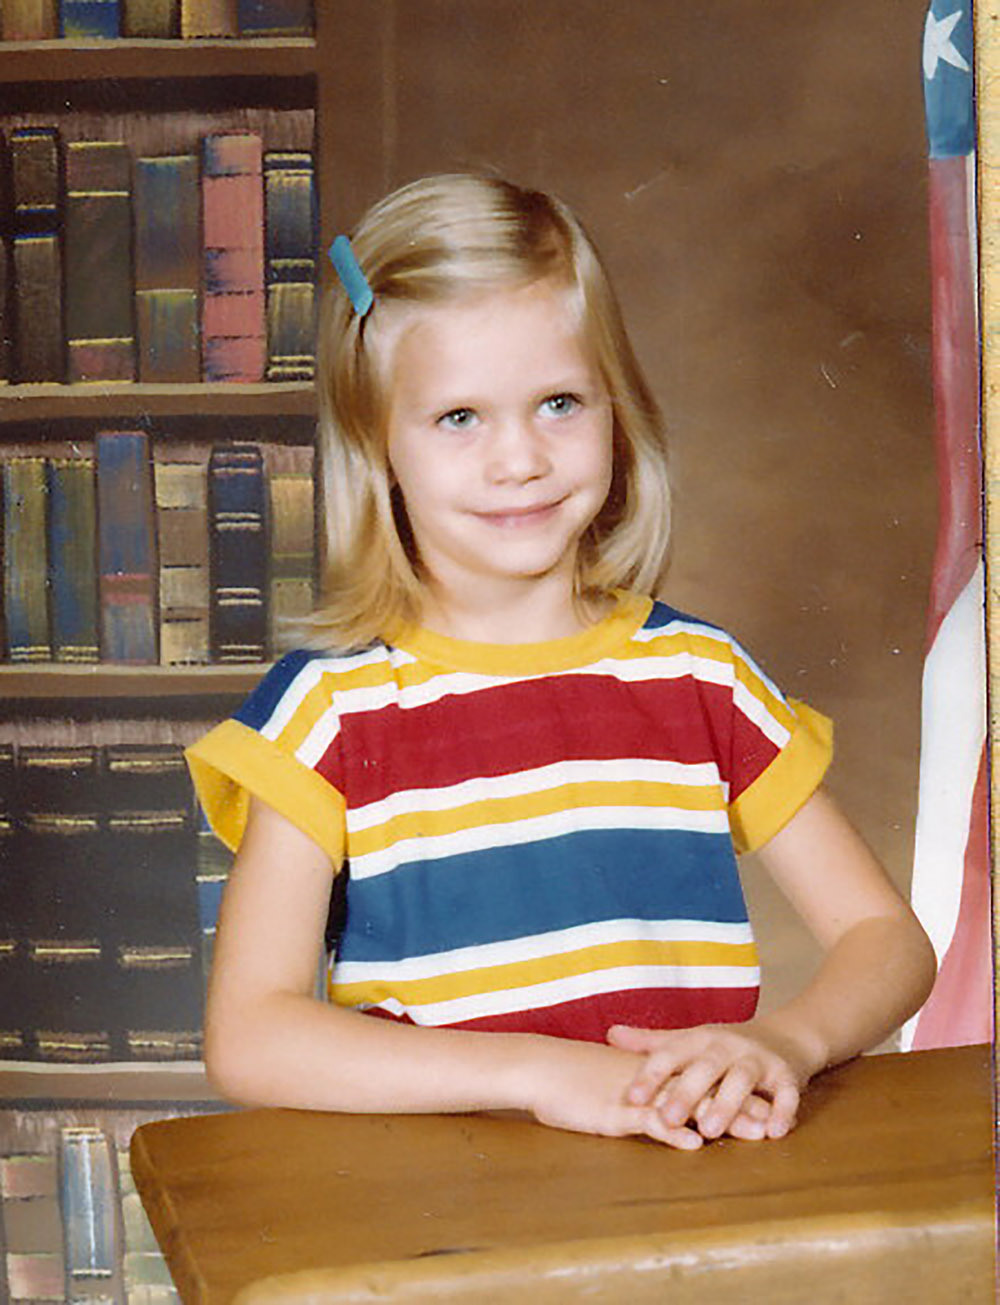 Kathy Boozer Boone as a child